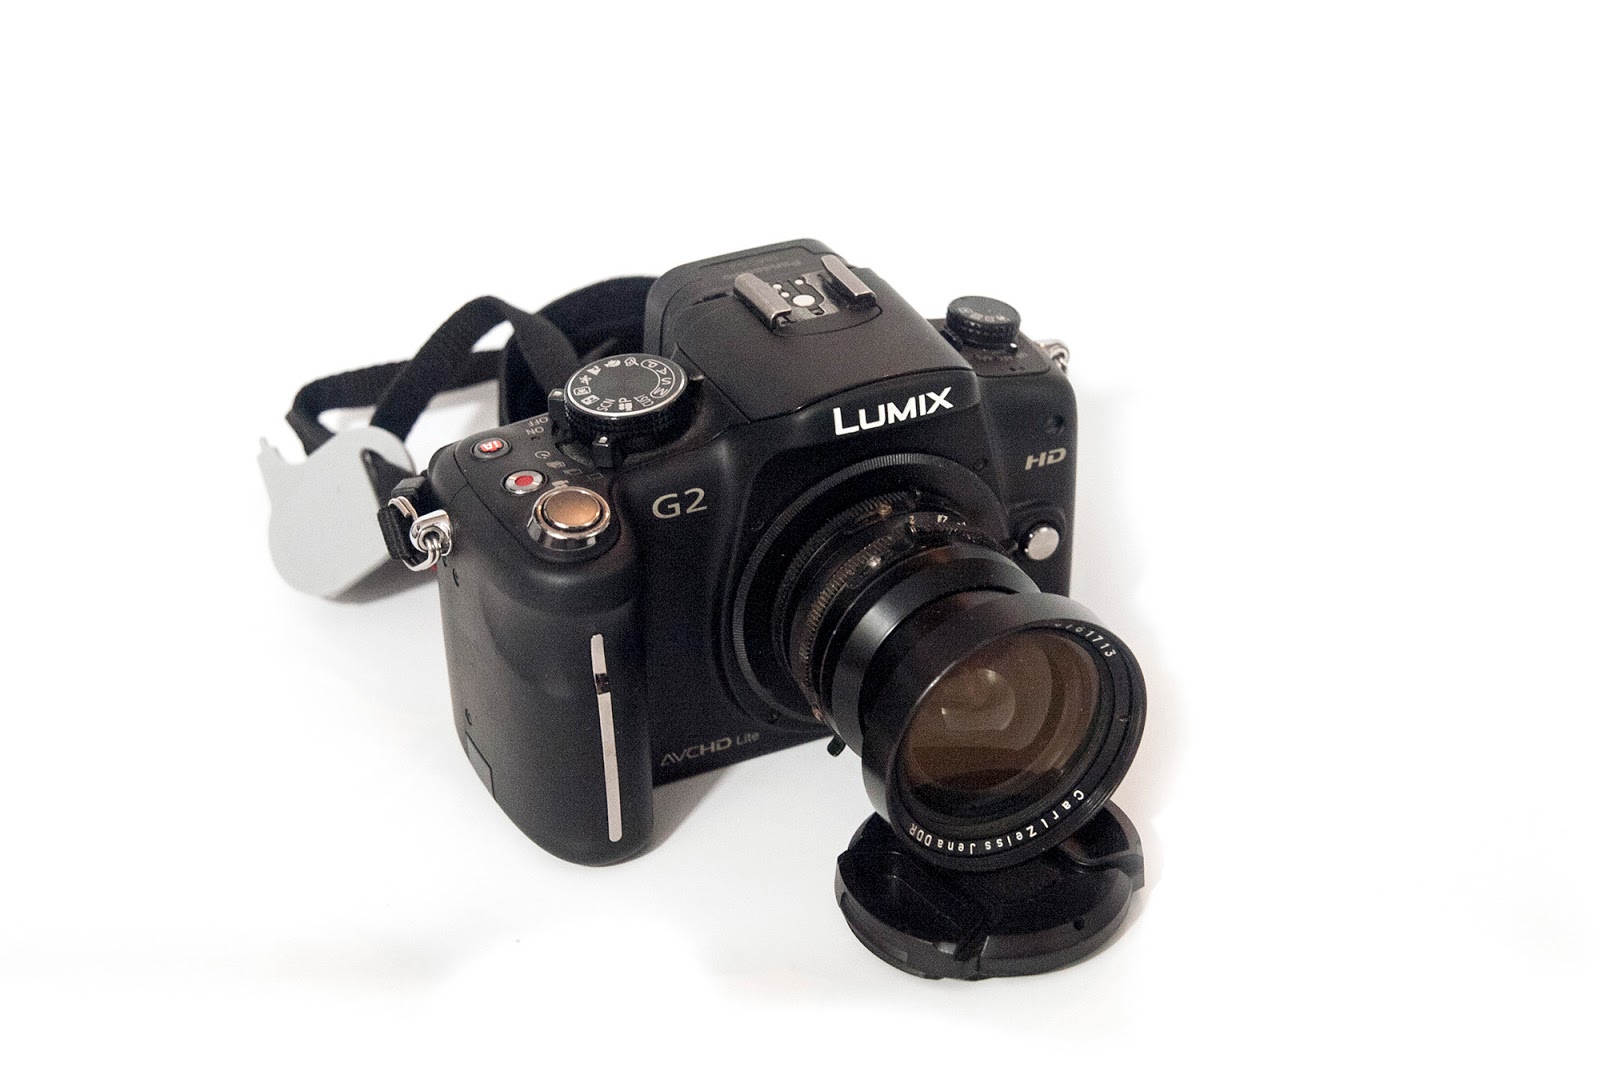 Tevidon 10/2 (10mm f2.0 C-mount) on Lumix G2 (MFT Camera).